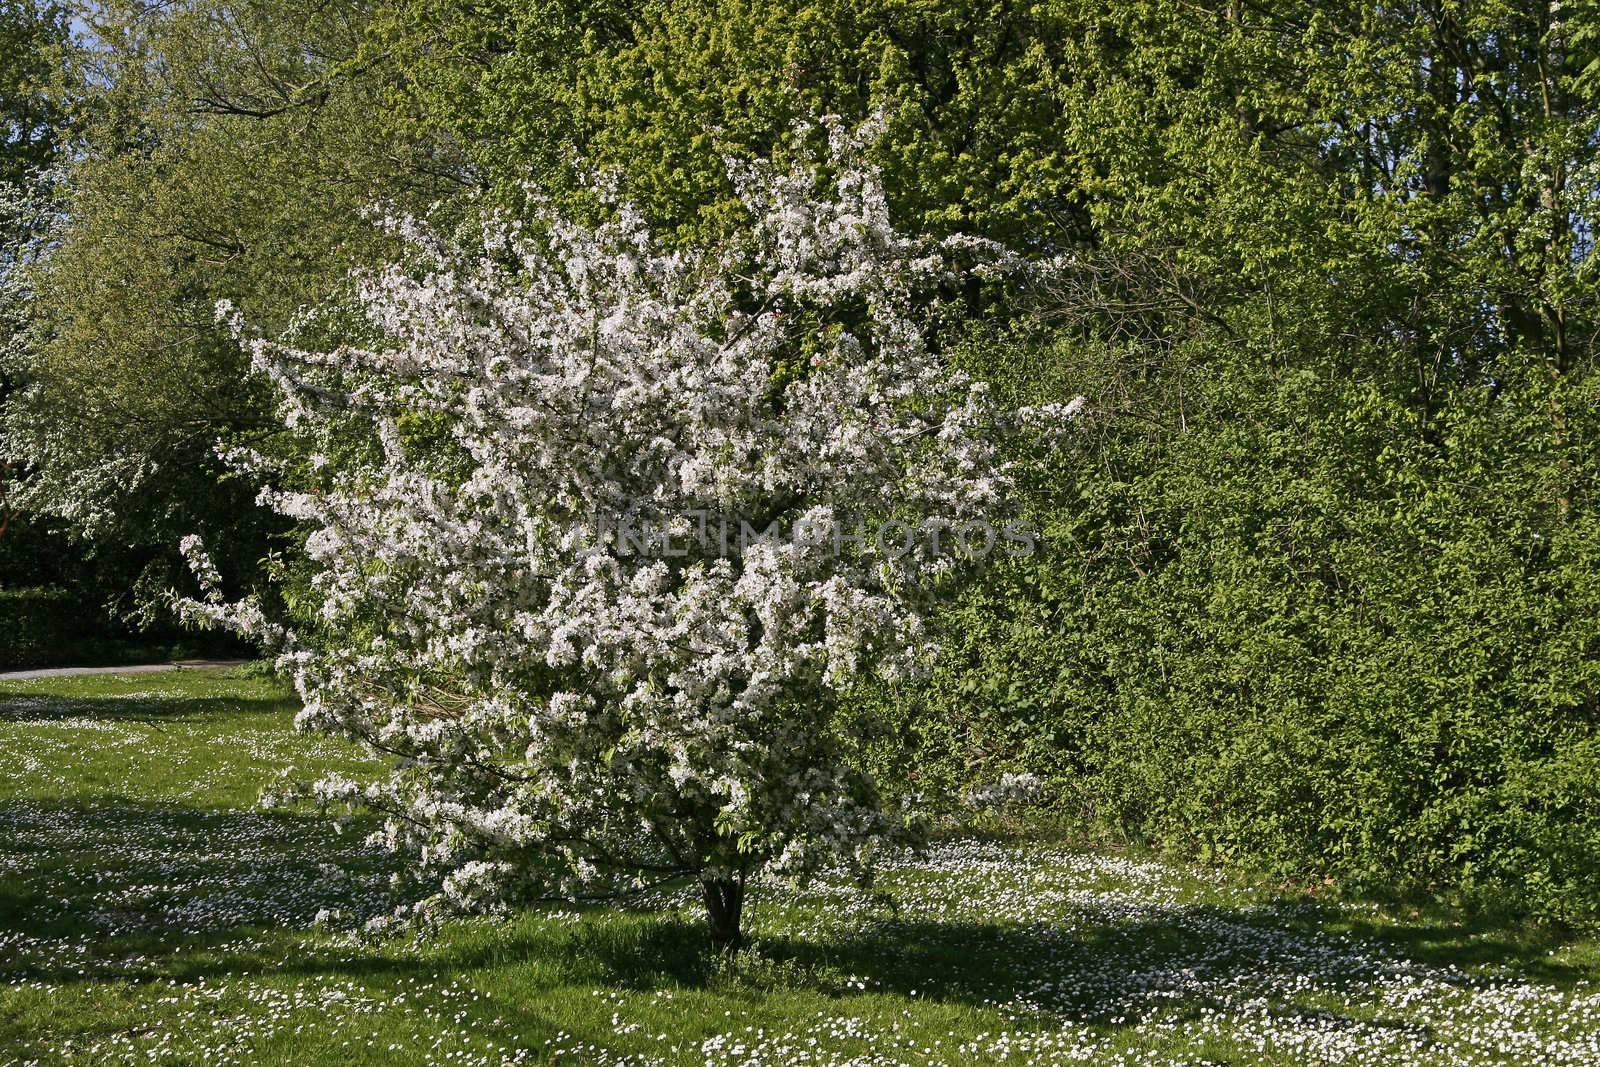 Cherry tree in spring near Bad Laer, Osnabrücker Land, Lower Saxony, Germany. Kirschbaumblüte. Bad Laer, Kirschbaum im Kurpark